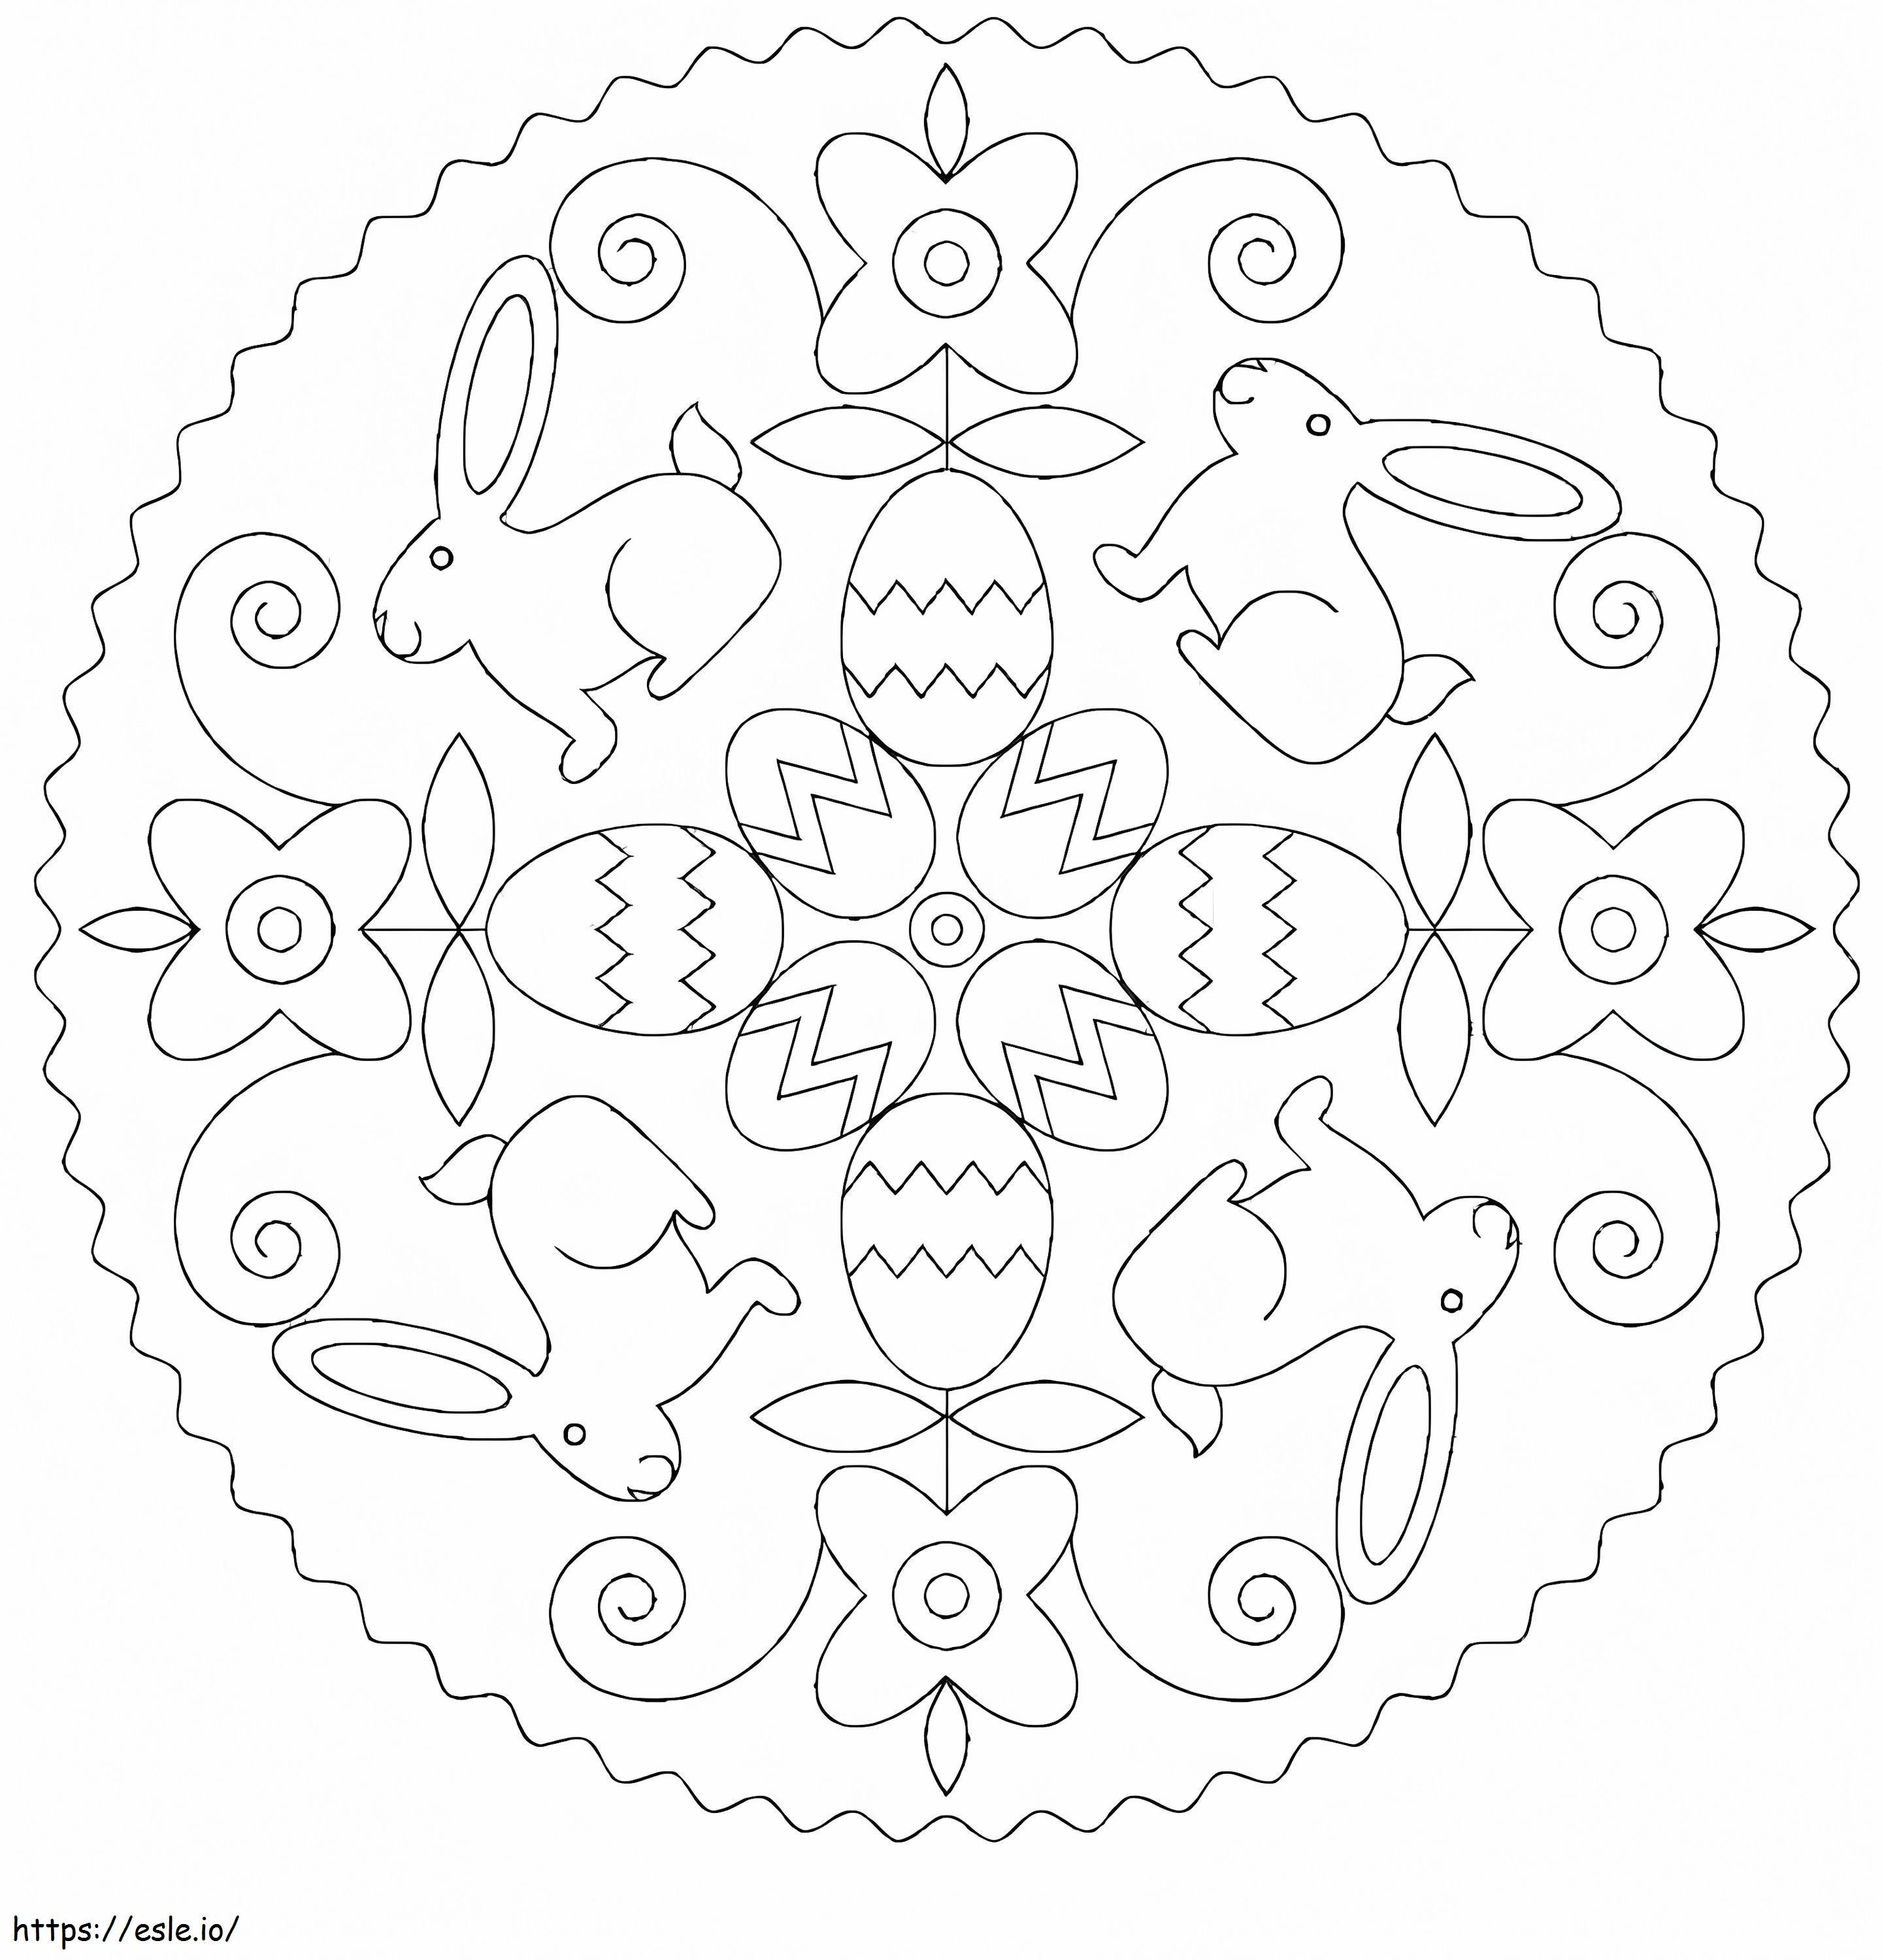 Wundervolles Mandala-Ostern ausmalbilder